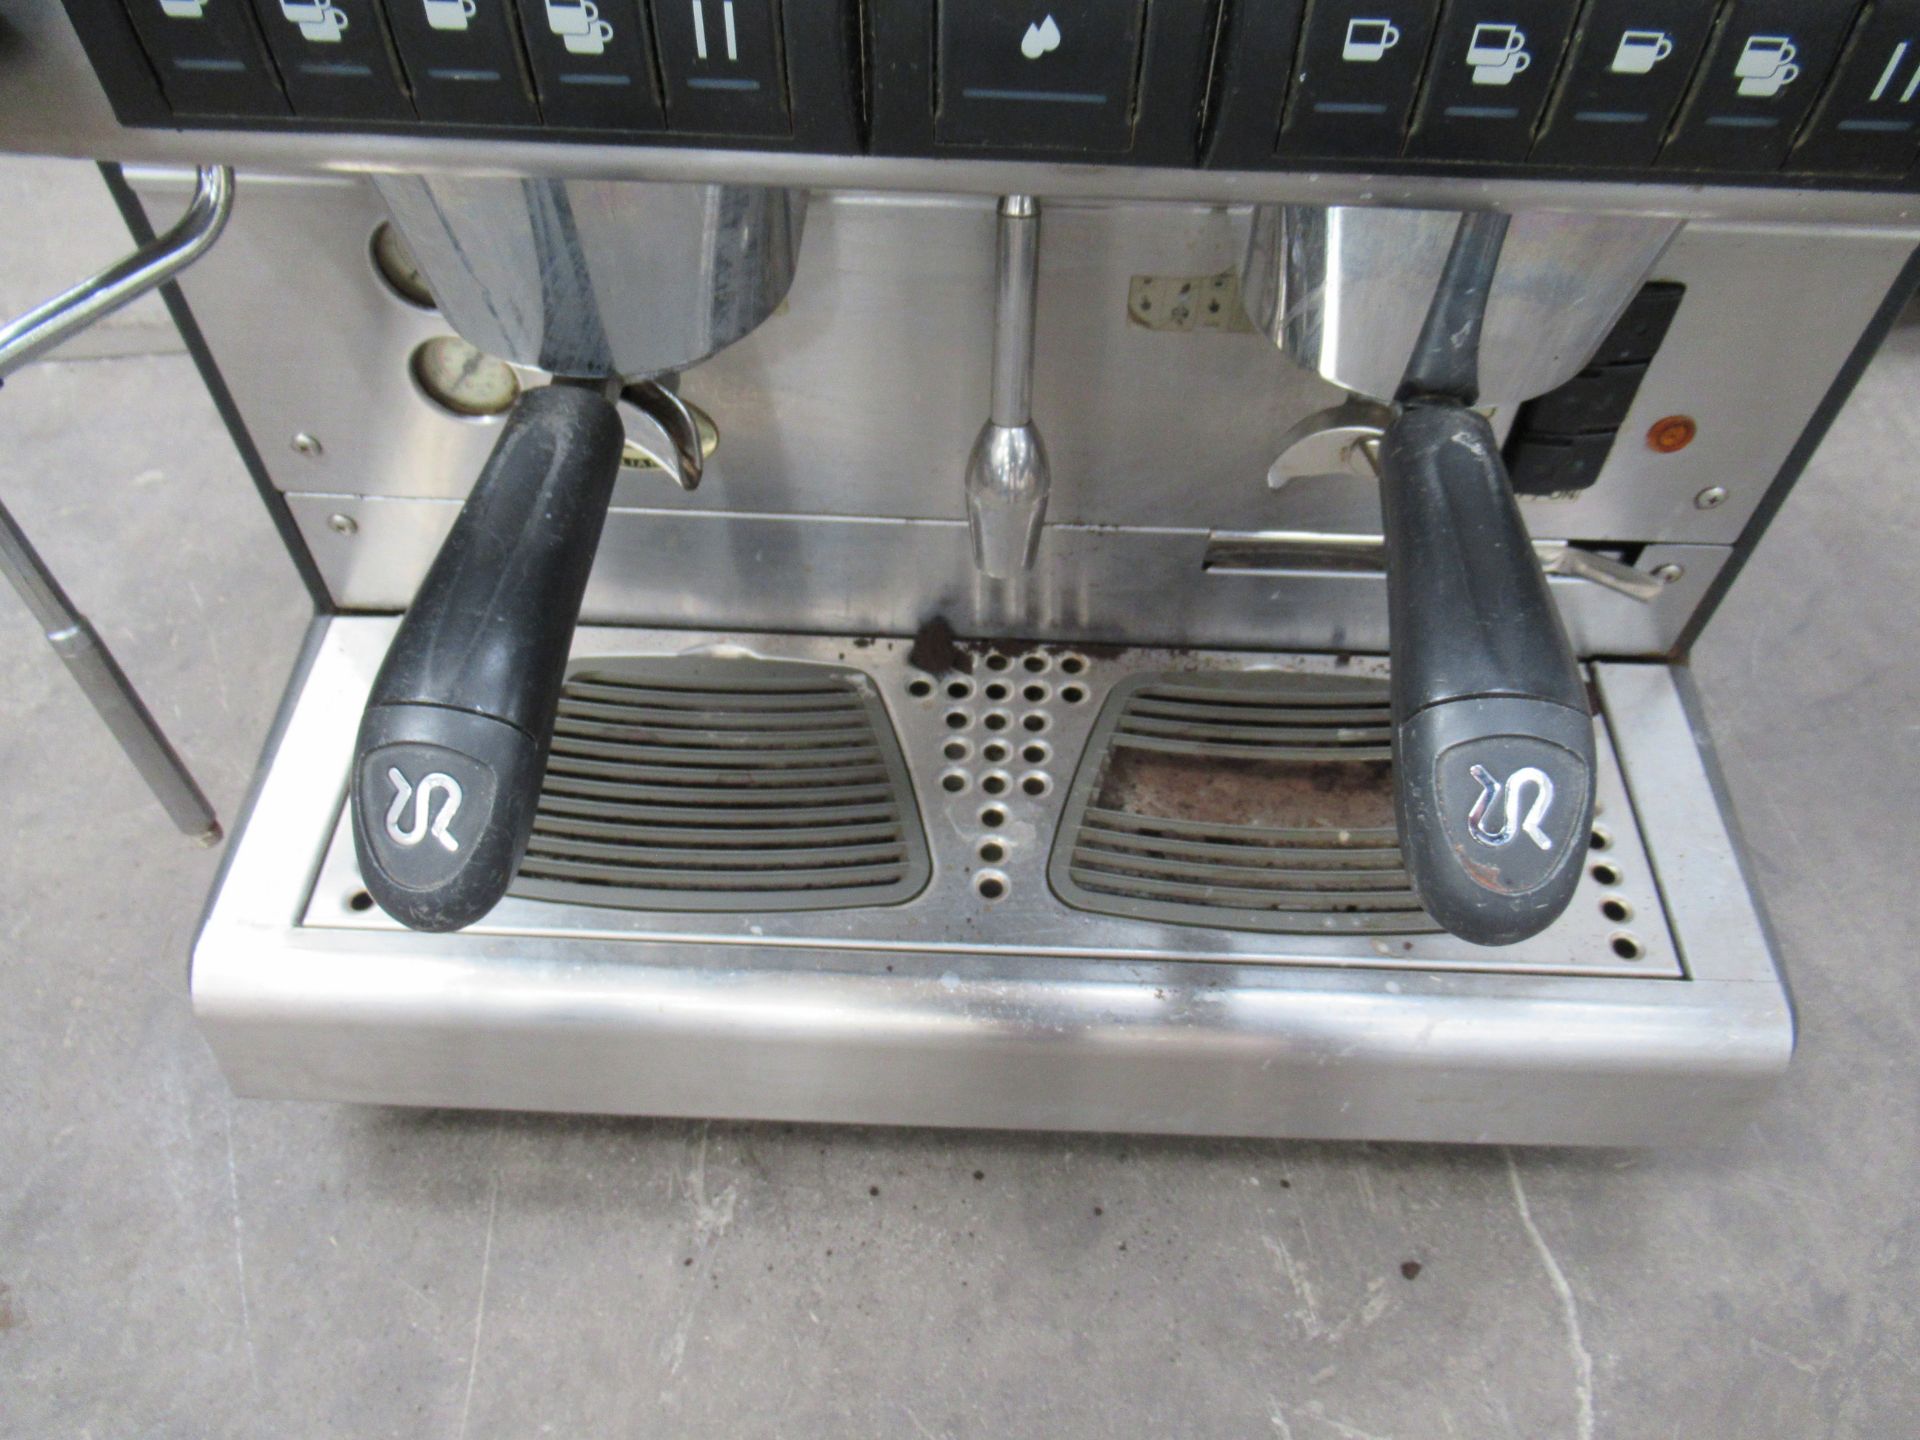 Rancilio Two Group Coffee/Espresso Machine - 240V - Image 2 of 5